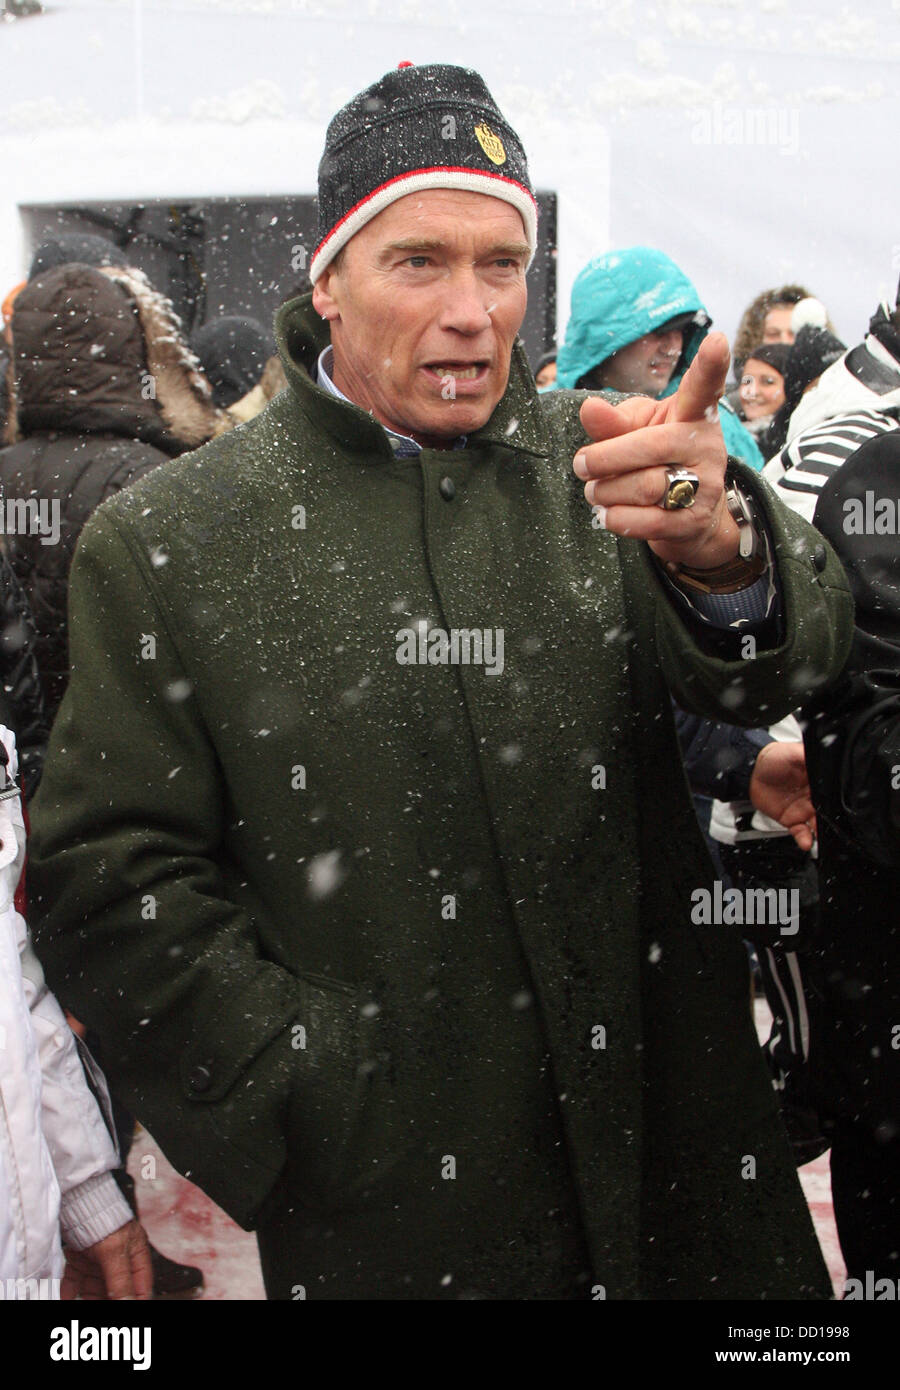 Arnold Schwarzenegger a Hahnenkamm gara di sci nelle Alpi Tirolesi durante la sua visita a Kitzbuhel Kitzbuhel, Austria - 21.01.12 Foto Stock